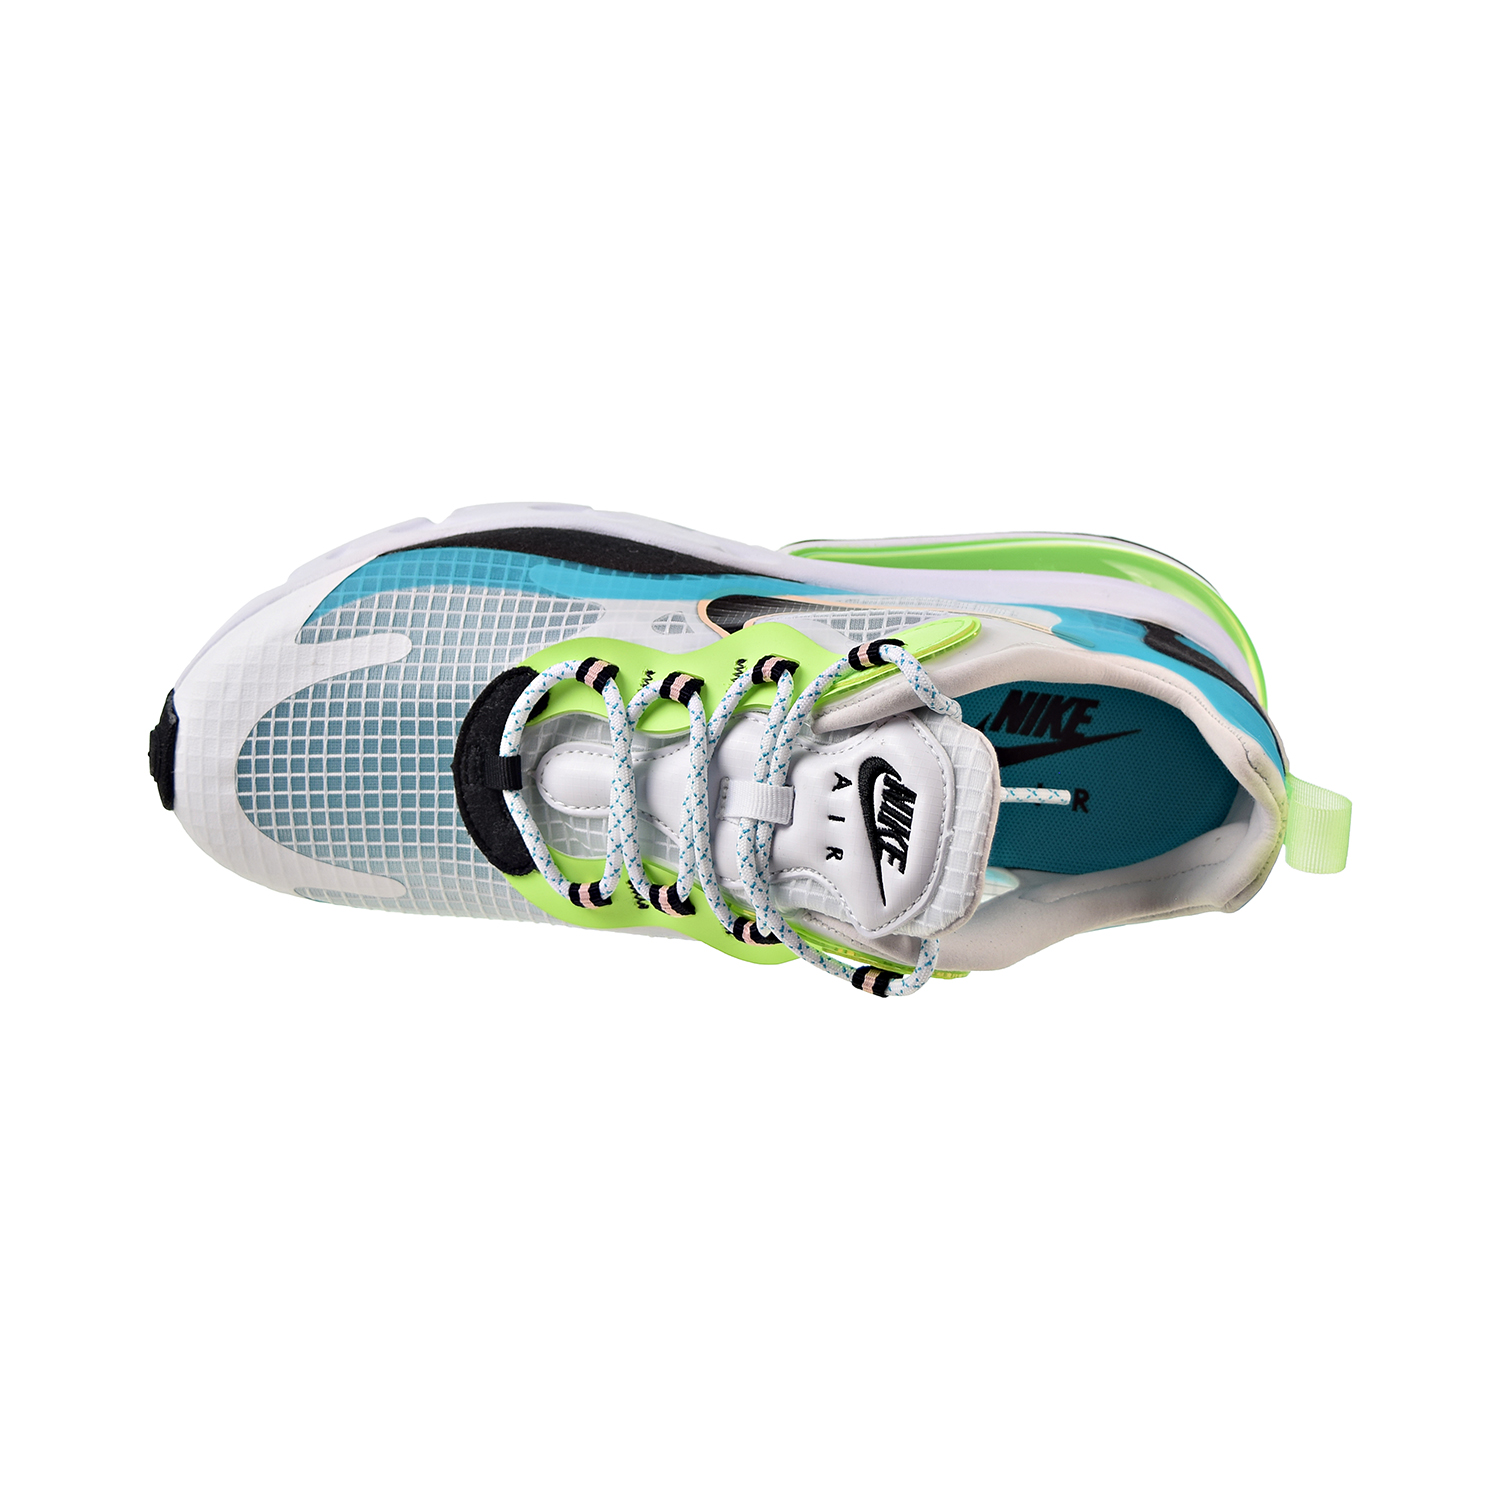 Nike Air Max 270 React SE Men's Shoes Oracle Aqua-Black-Ghost Green ct1265-300 - image 5 of 6